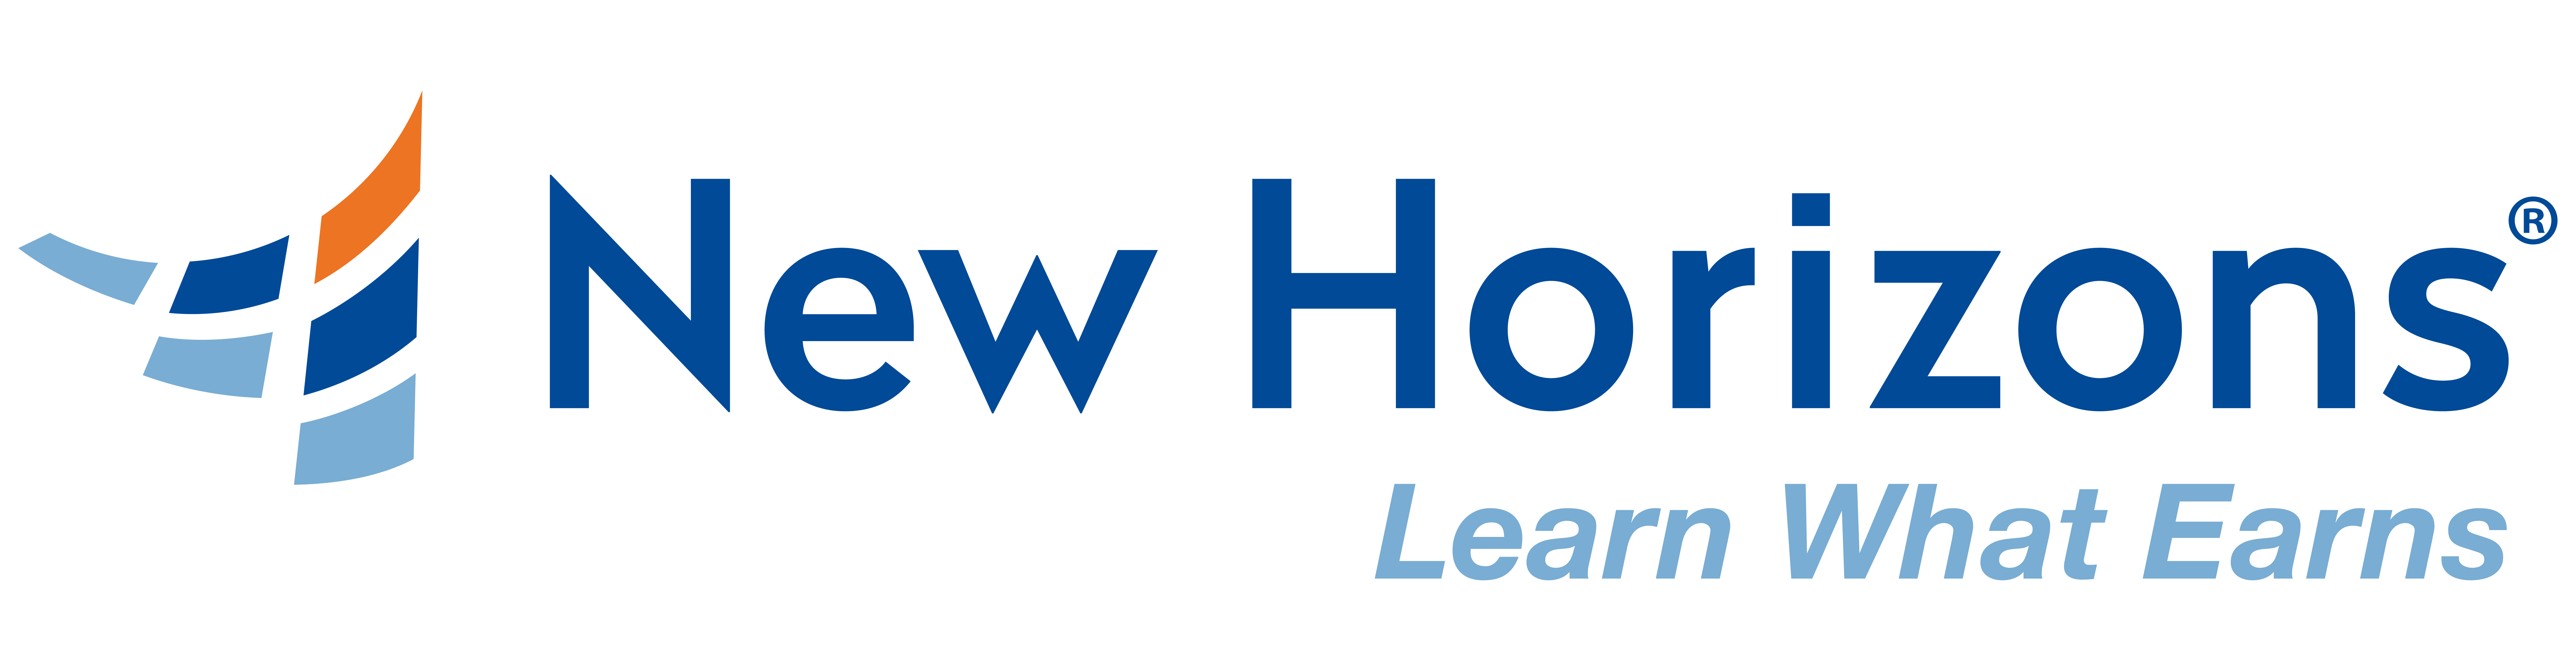 New Horizons South Florida Company Logo